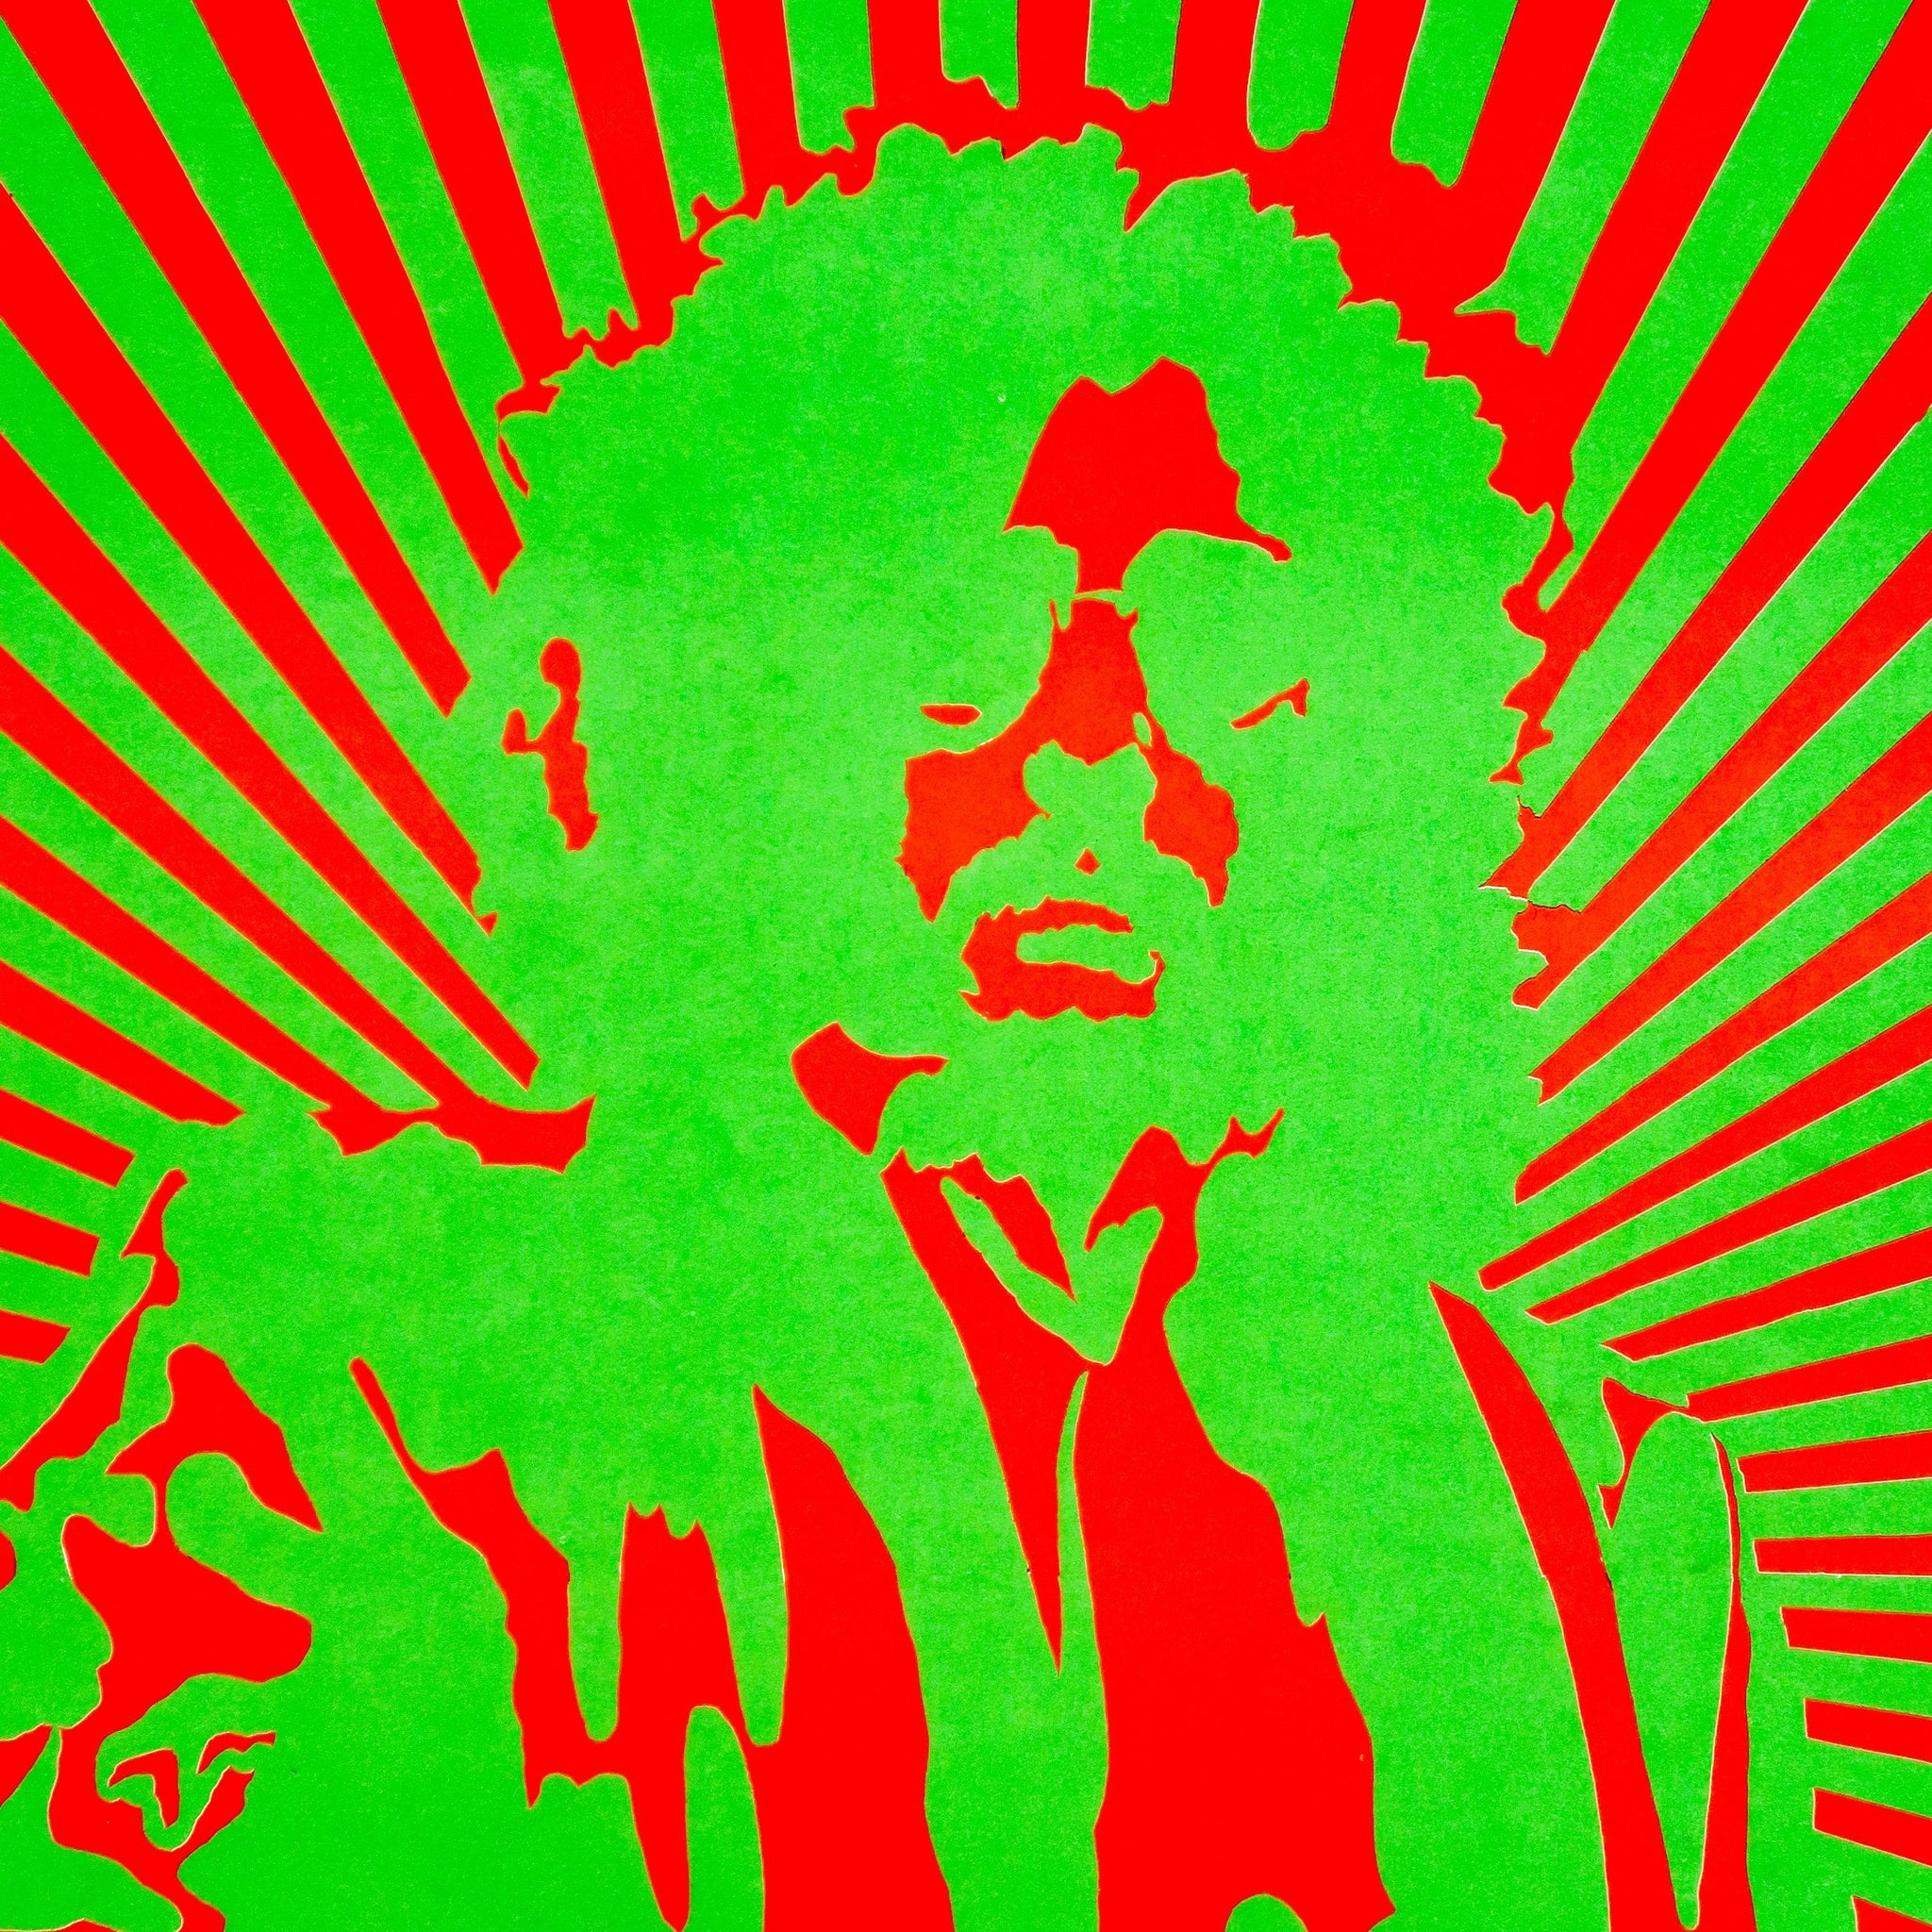 Original 1969  Eric Clapton/Cream Original psychedelic poster by Peter Blumer.